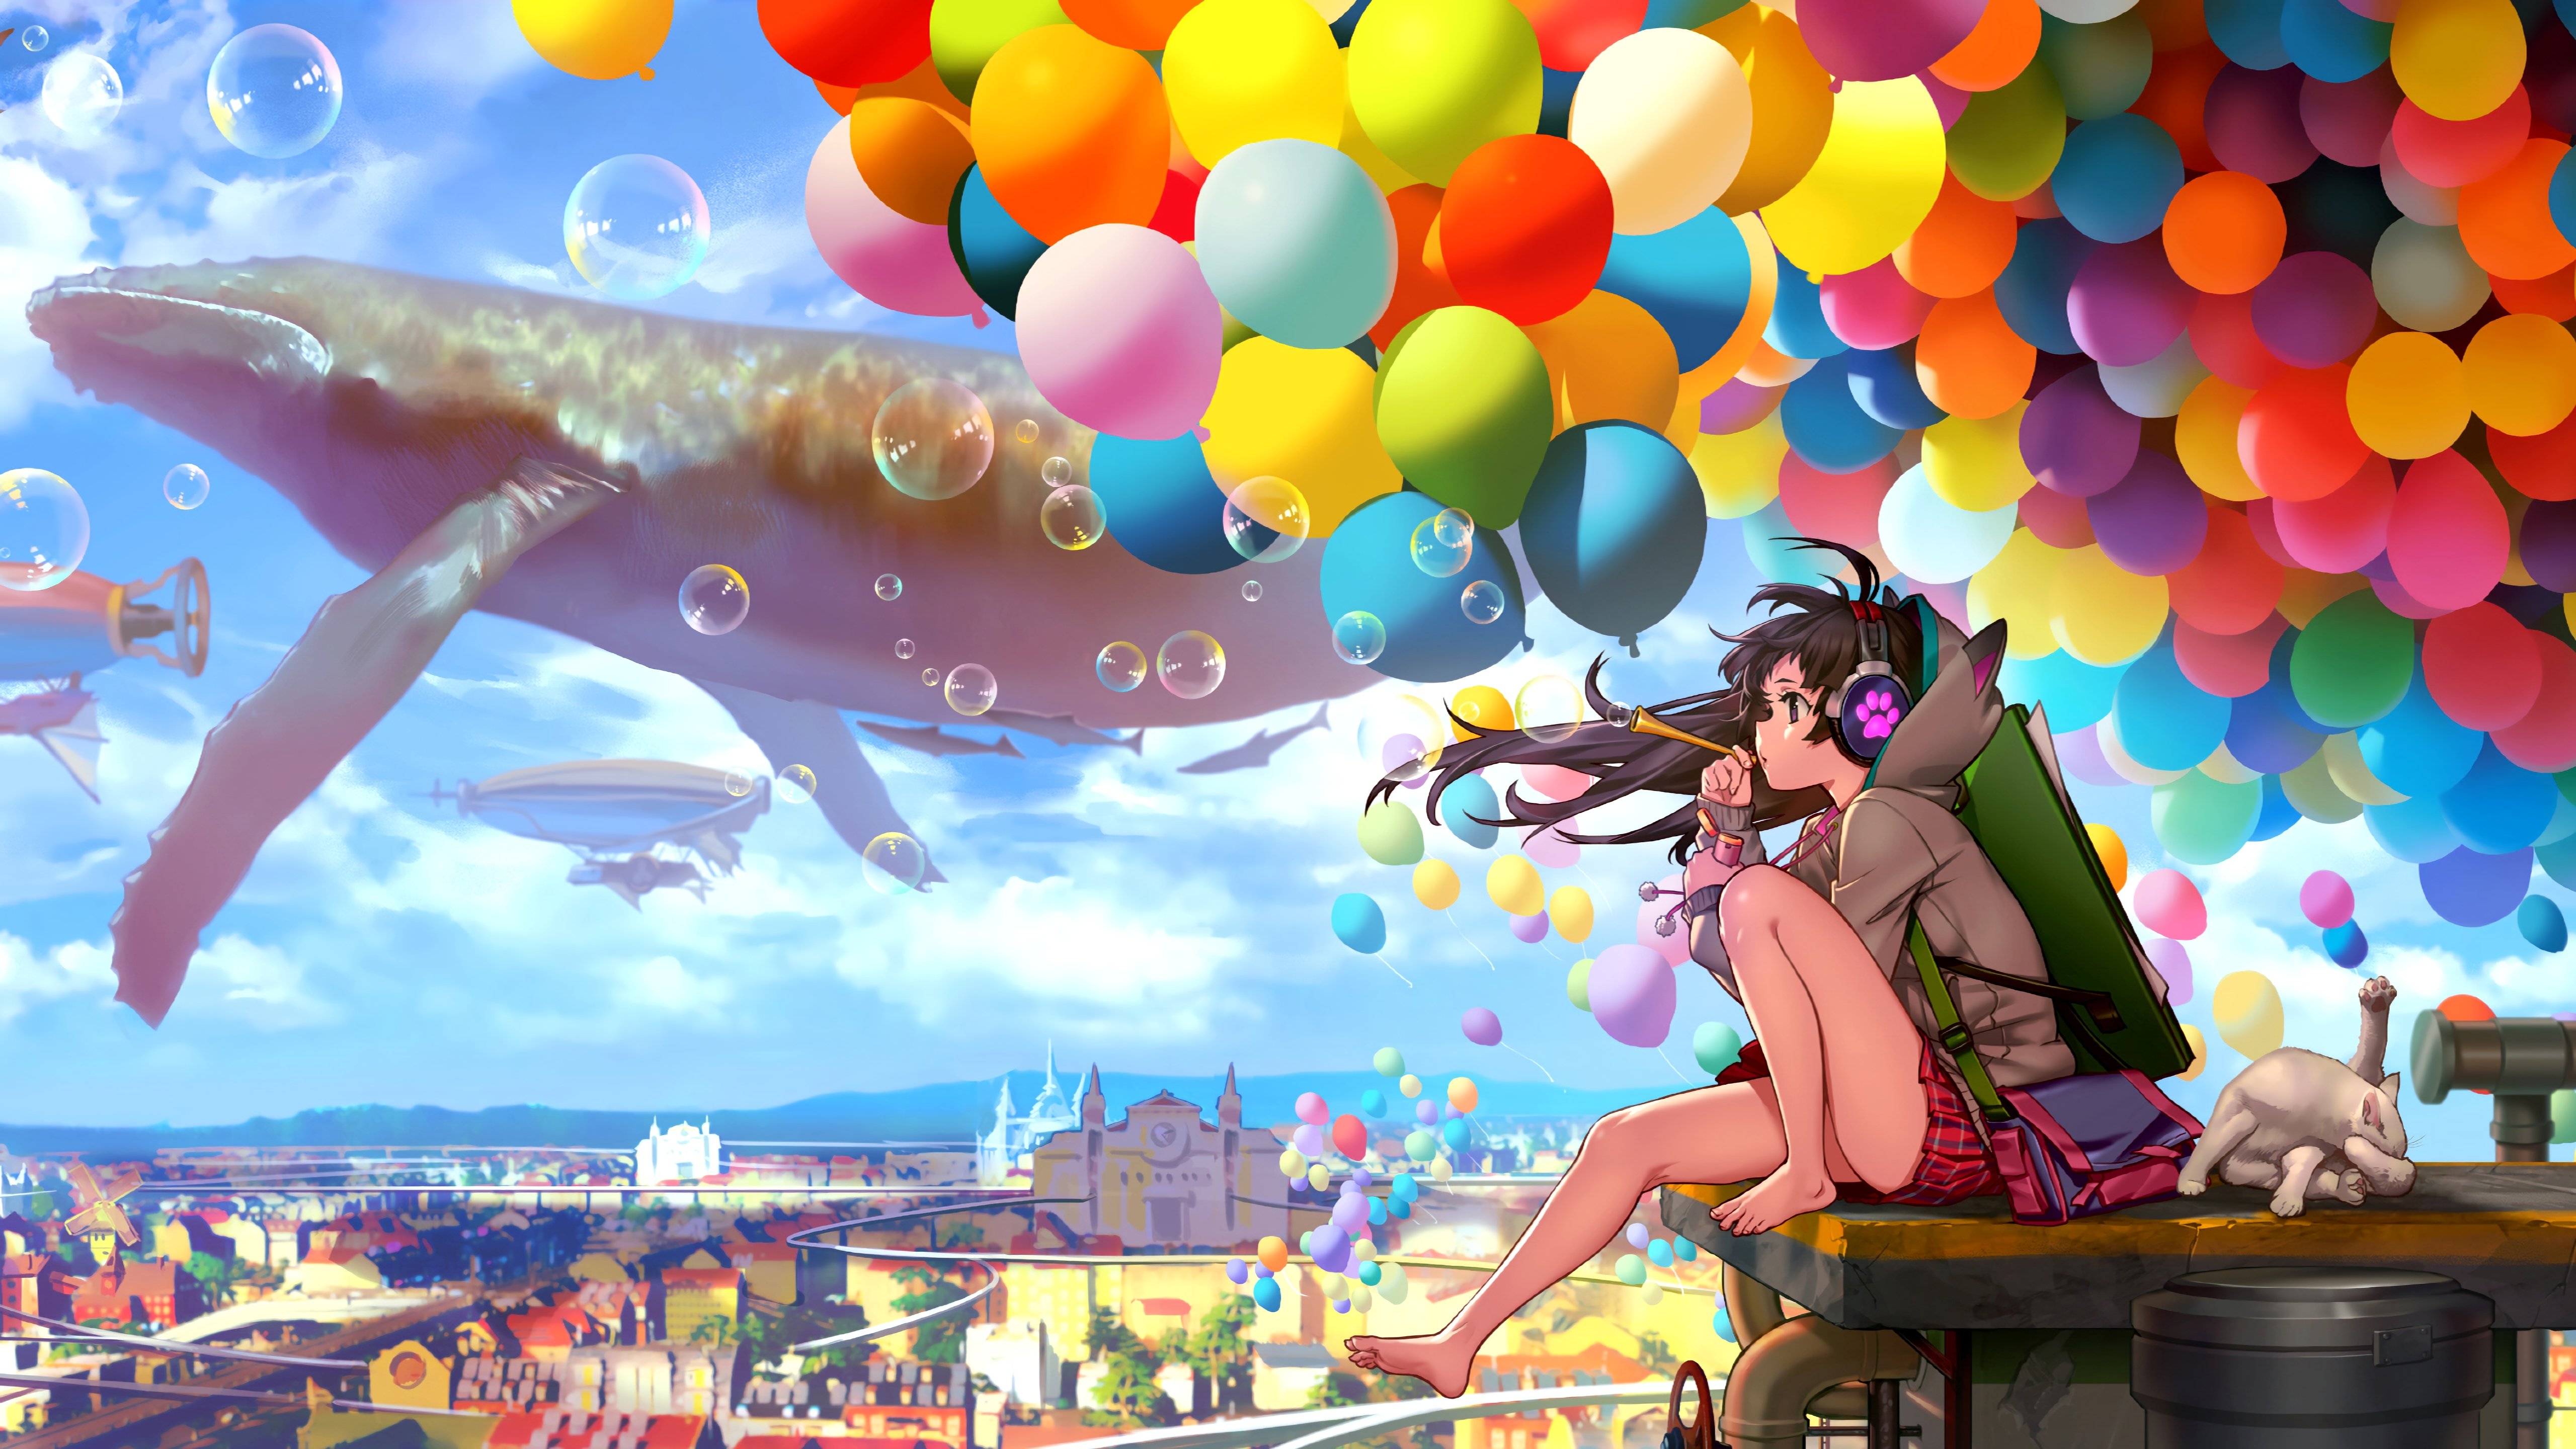 Anime School Girl Bubble Sunset Scenery Wallpaper 4K HD PC 3030g